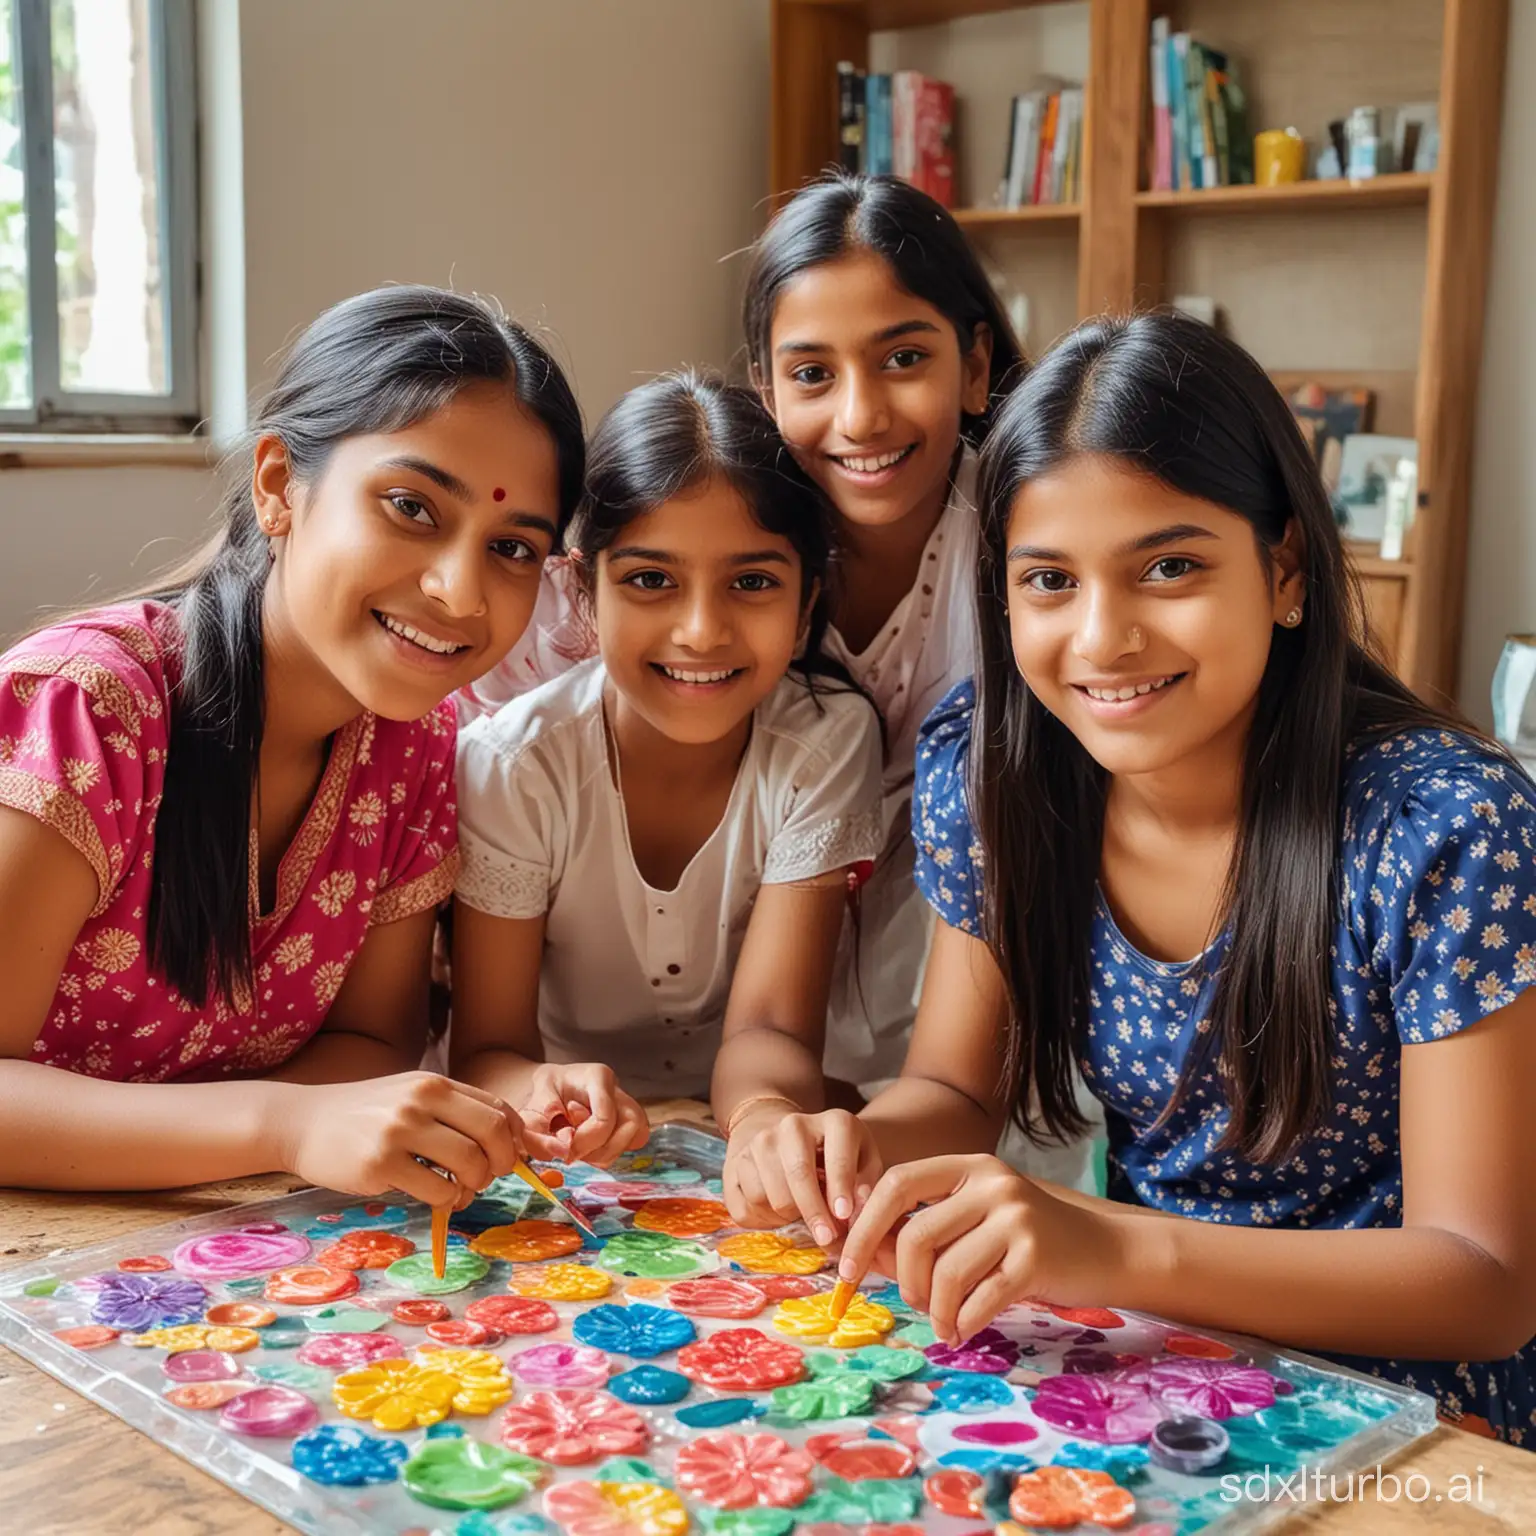 Adorable-Indian-Girls-Crafting-Resin-Art-Together